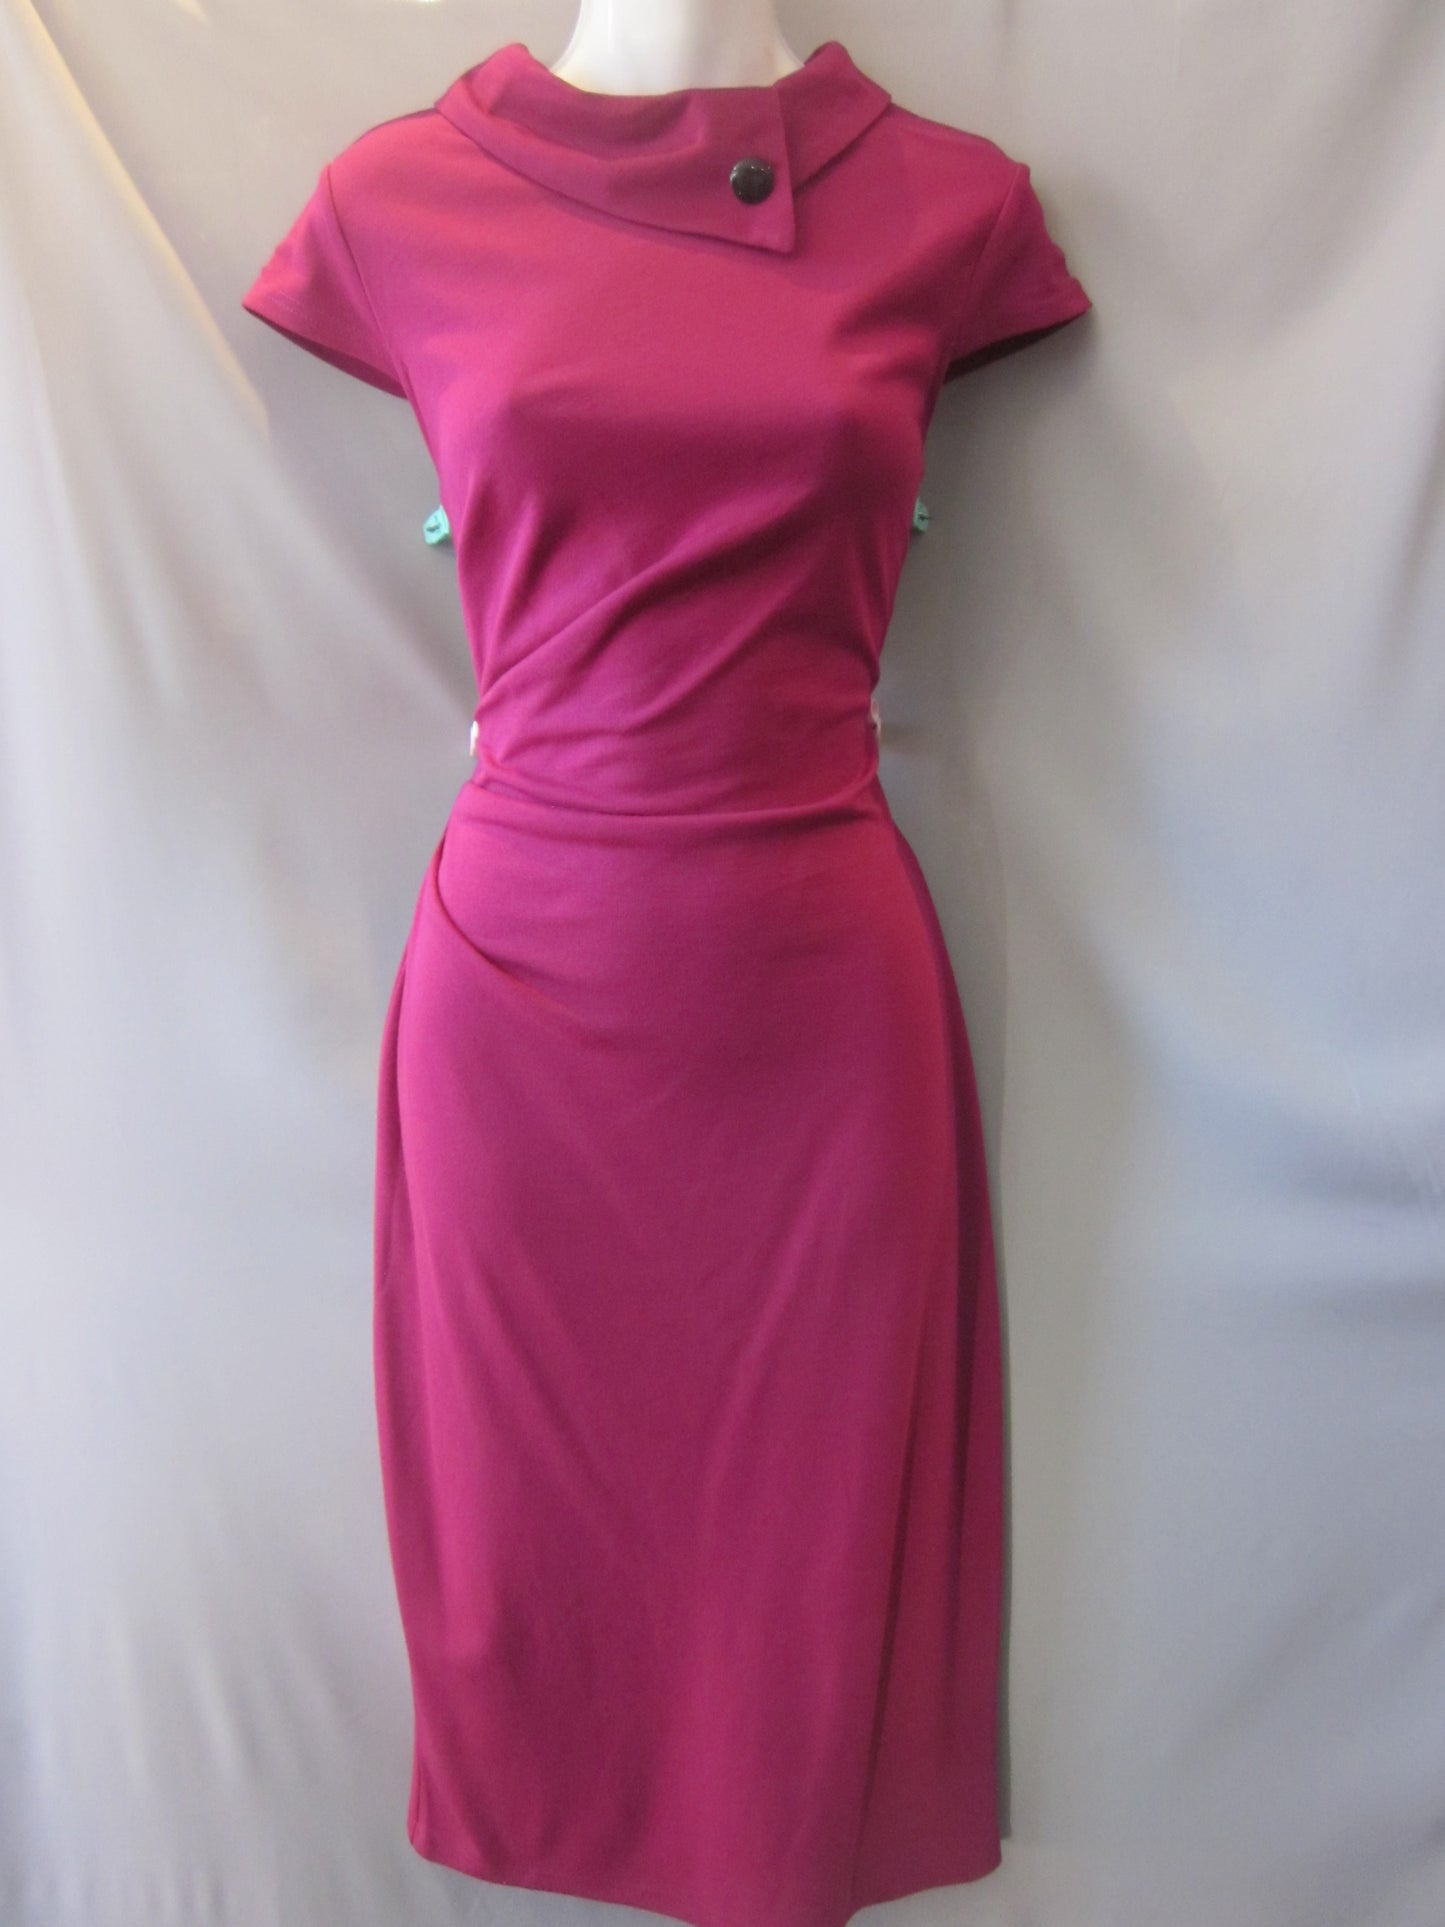 Short Collar Dress Size Large Style B574 - MISS LESTER'S 